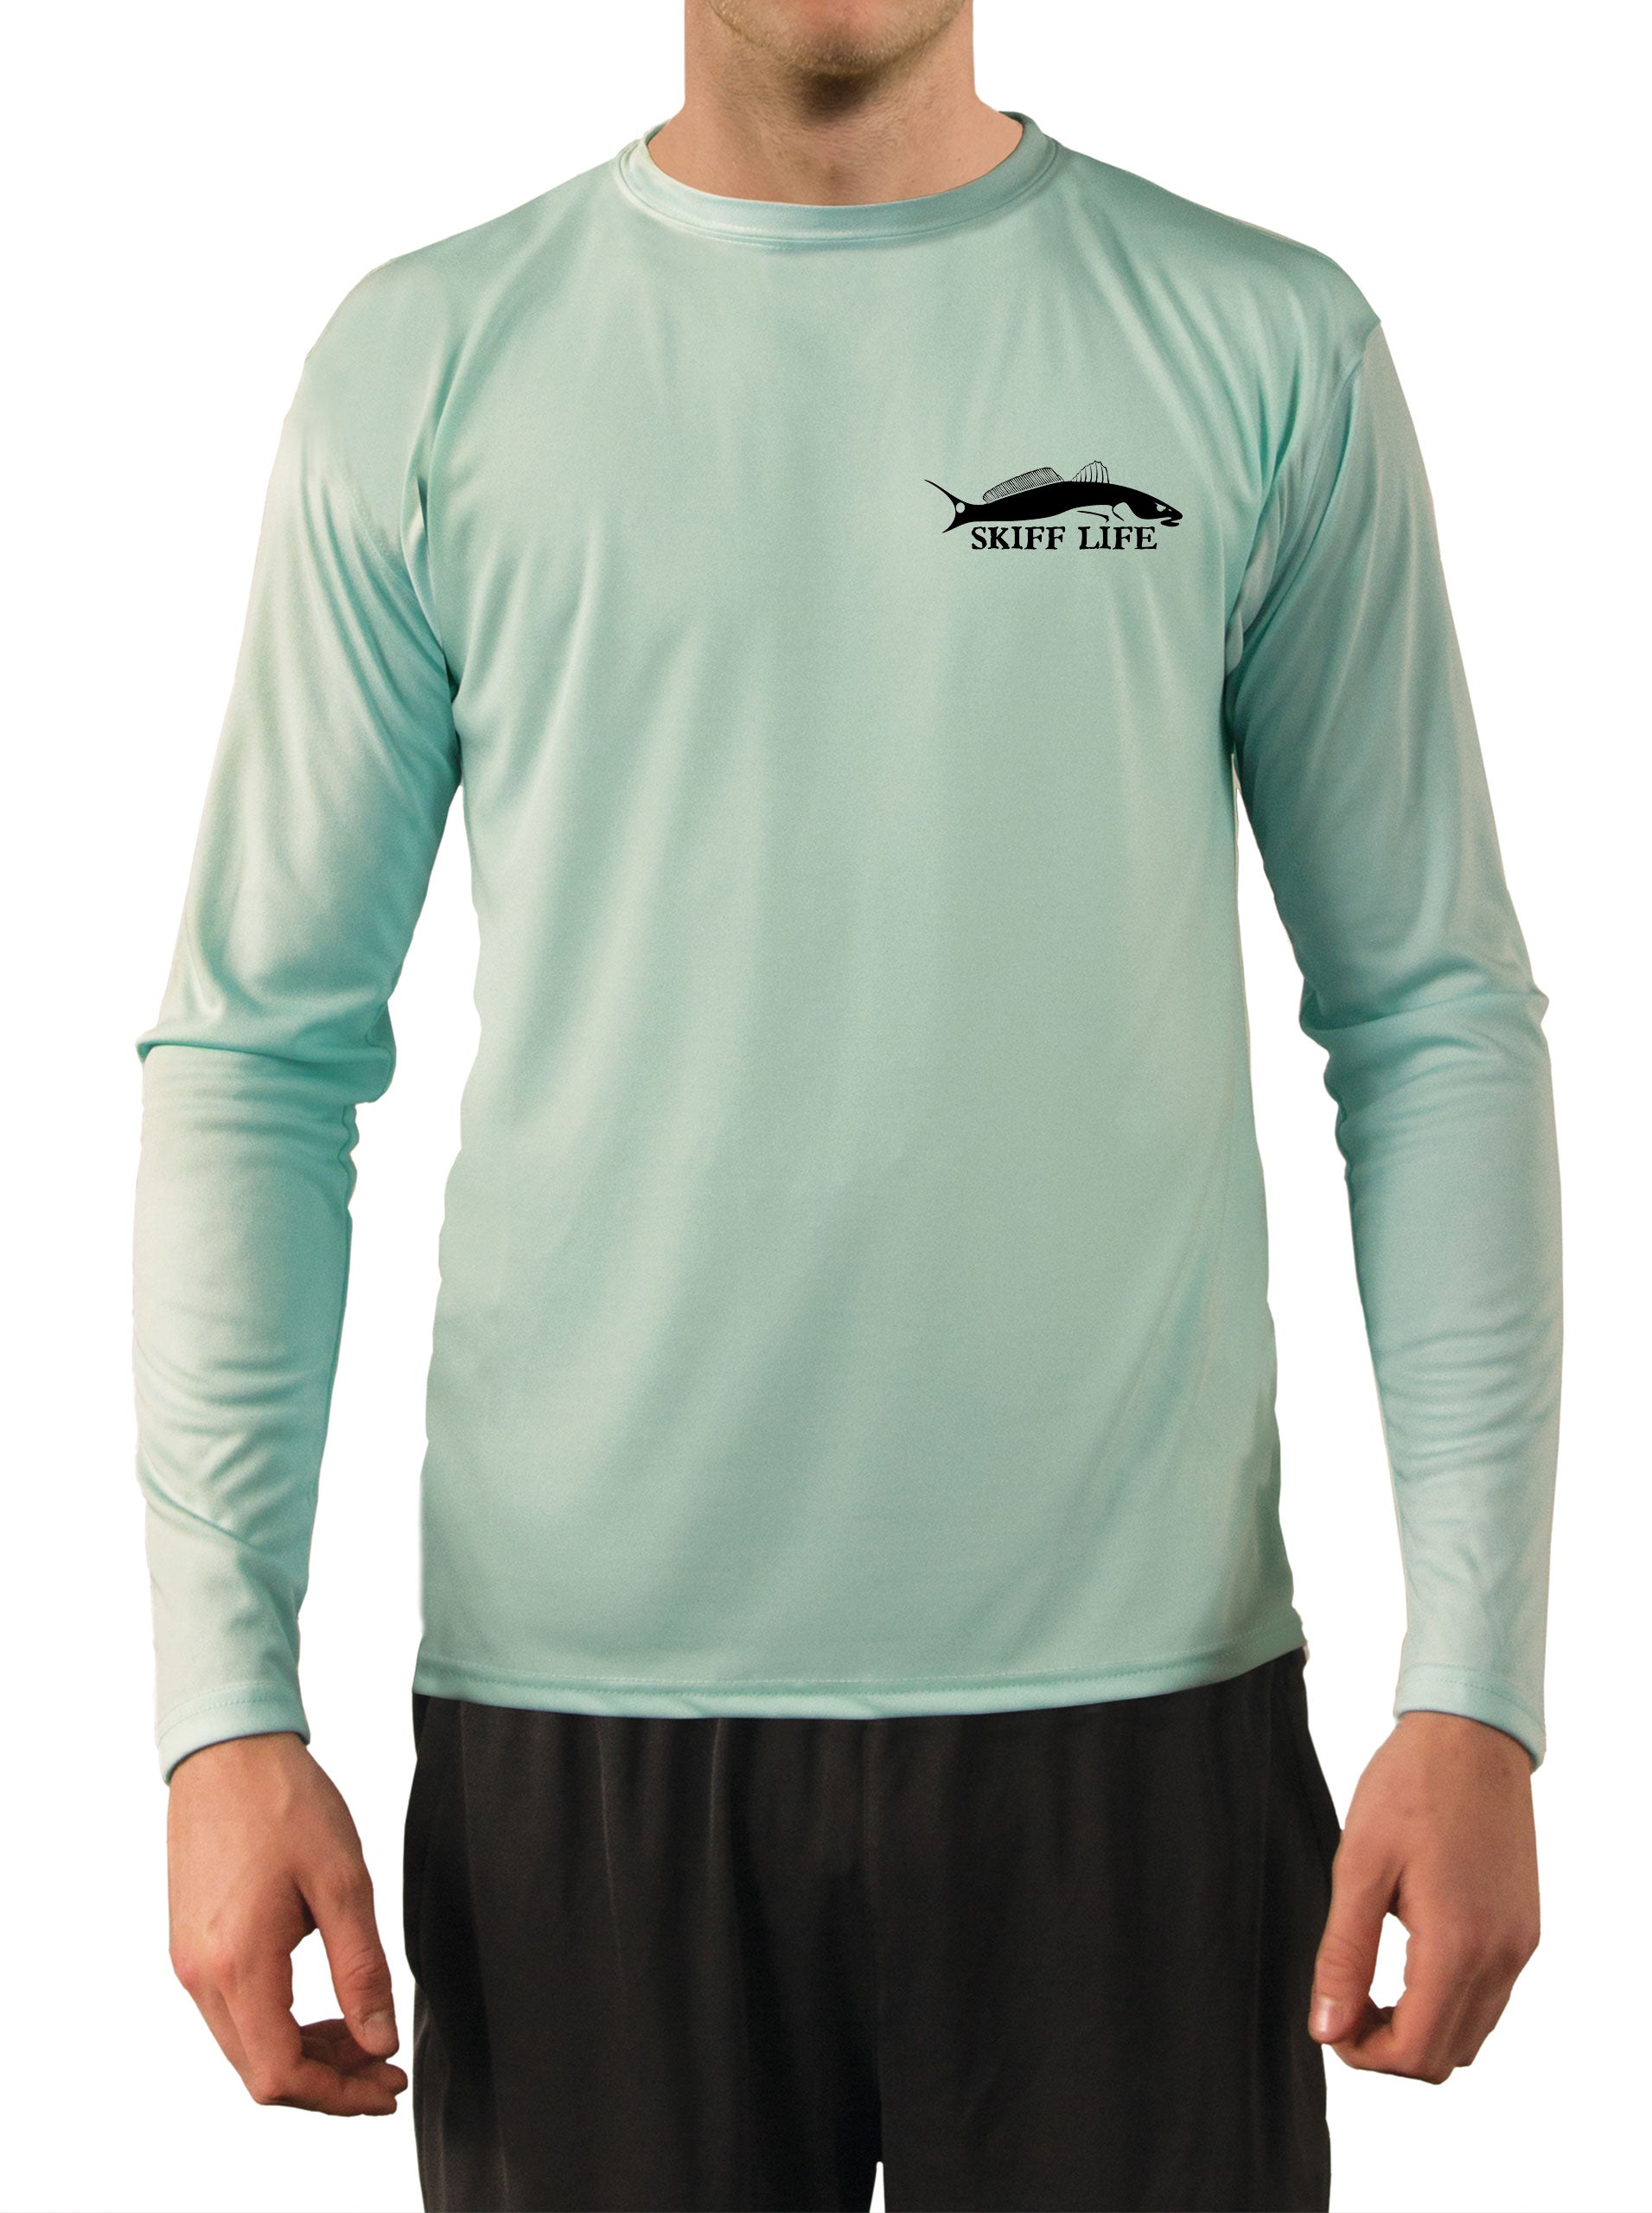 Custom Fishing Trip Shirts UPF 50+ Rash Guard Fishing Shirts Family Vacation Shirts adult Swim Shirt Kids Swim Shirt